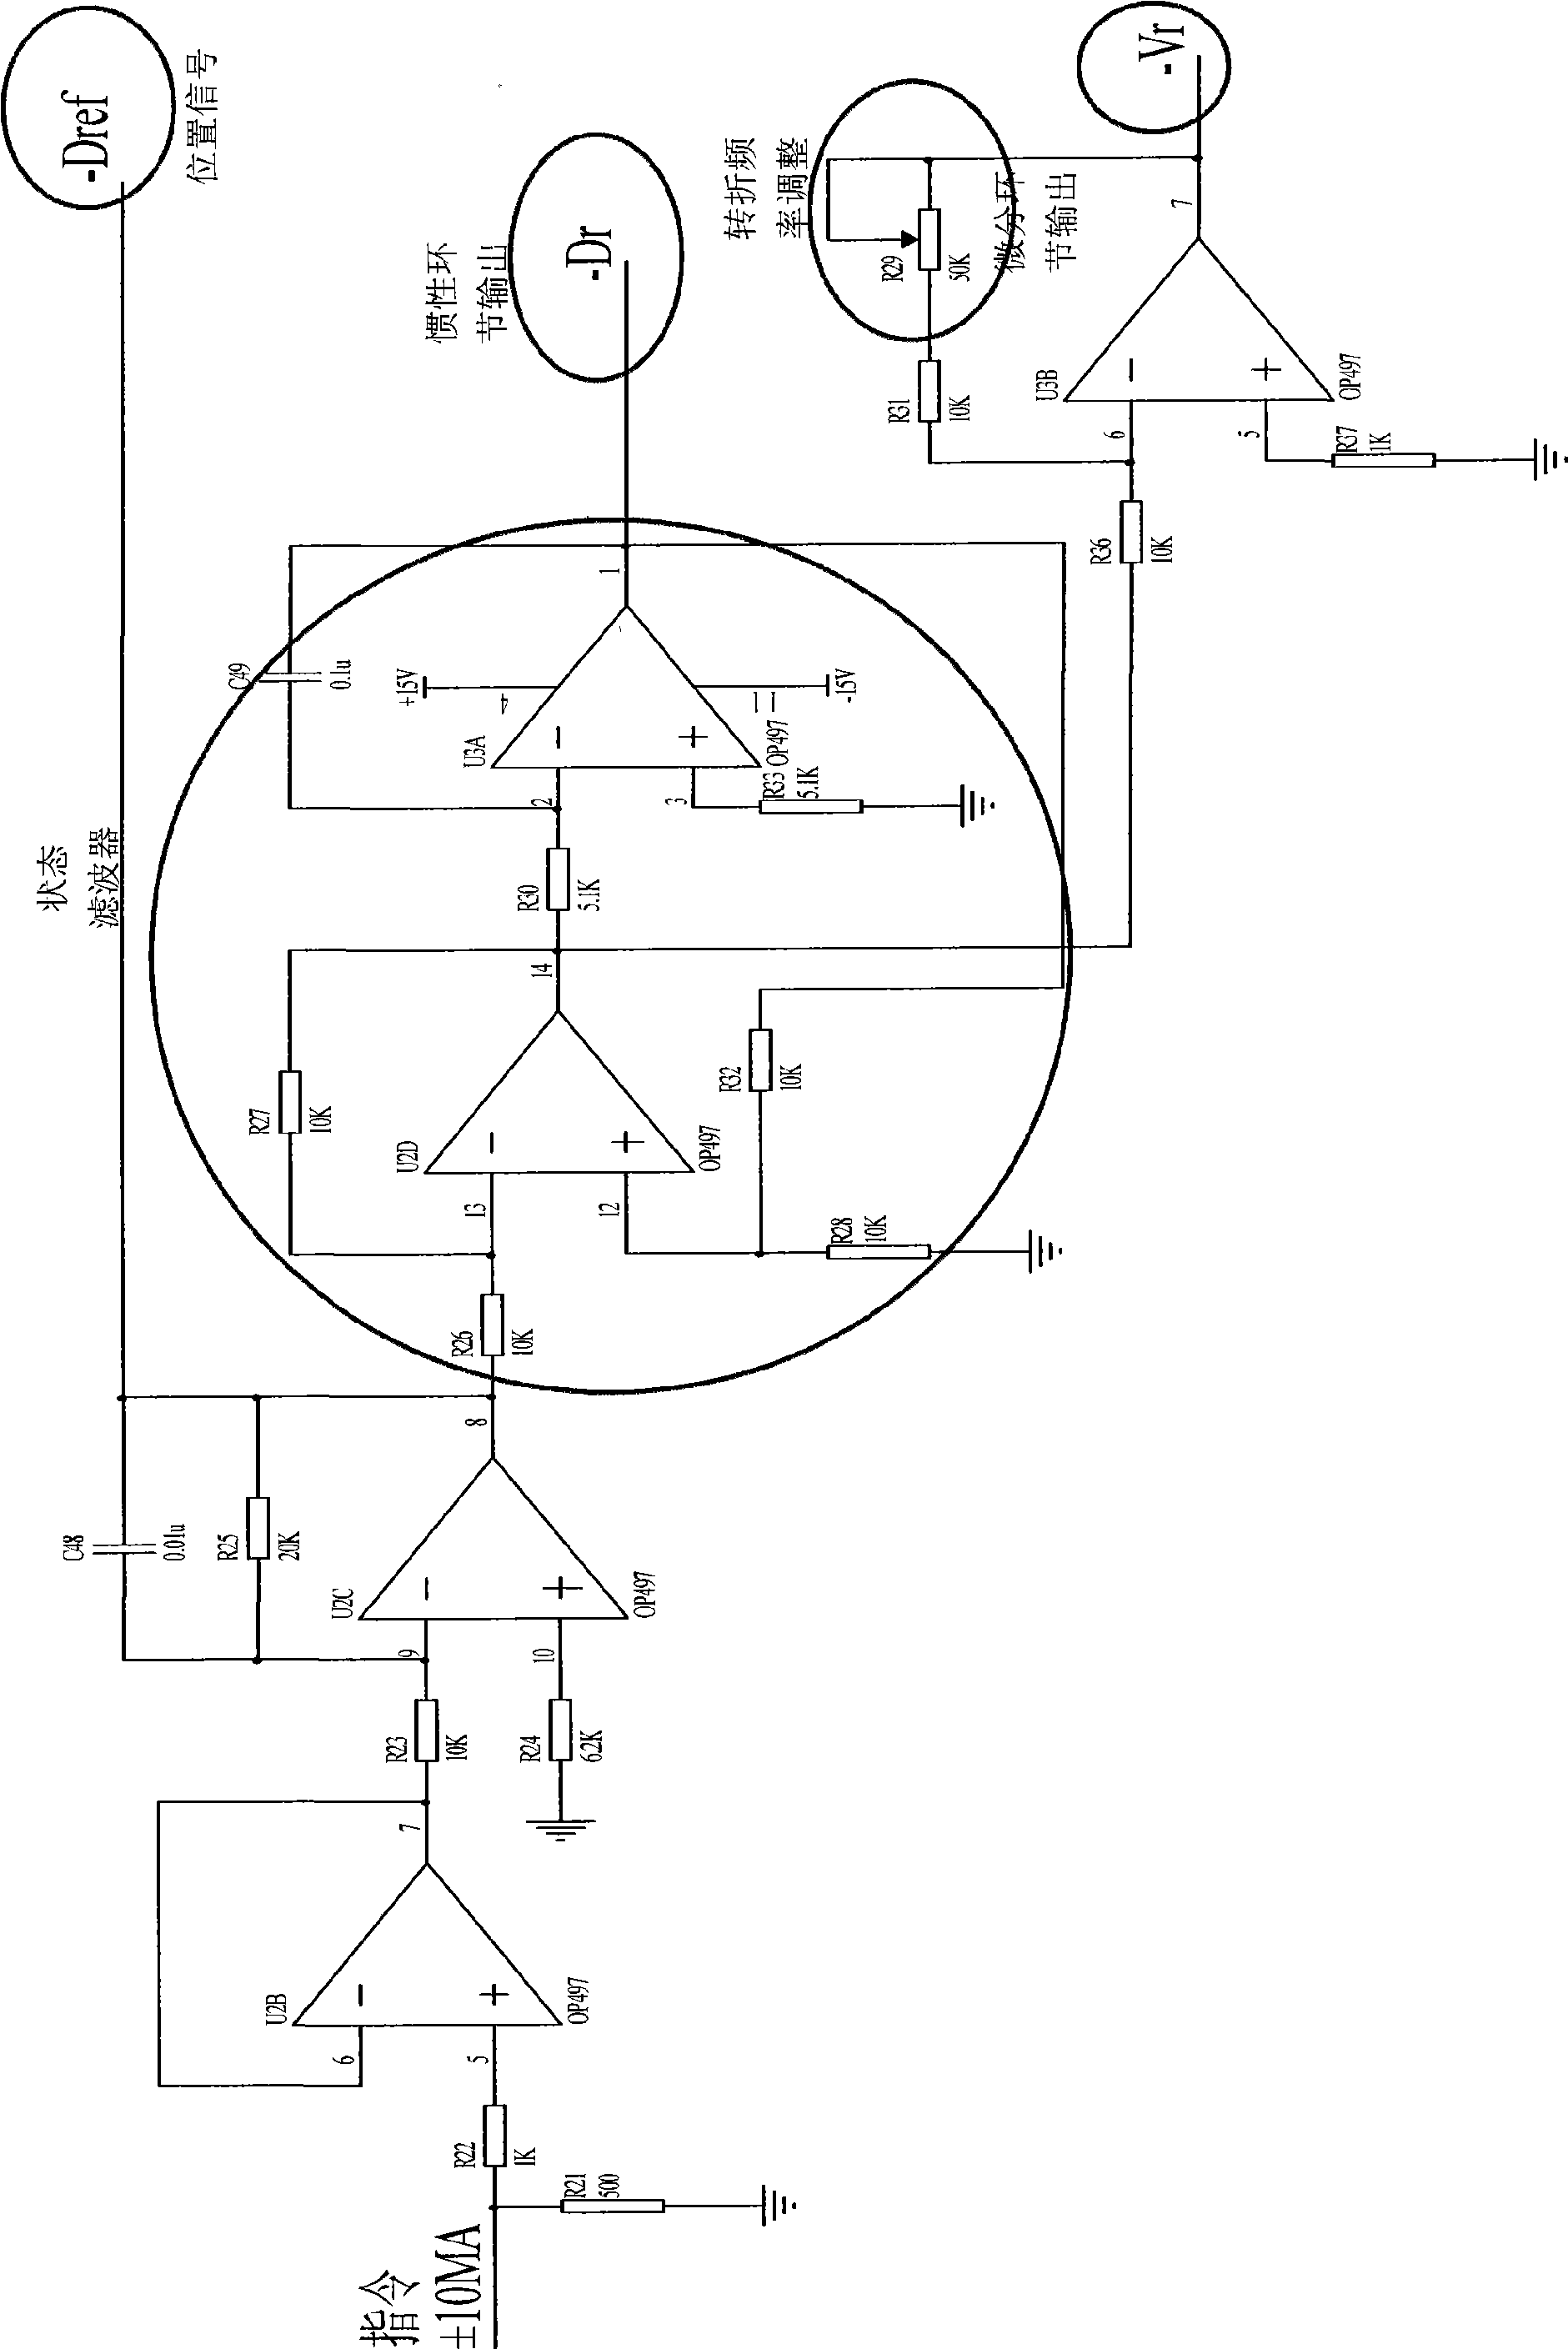 Controller of three-stage electro-hydraulic servo valve